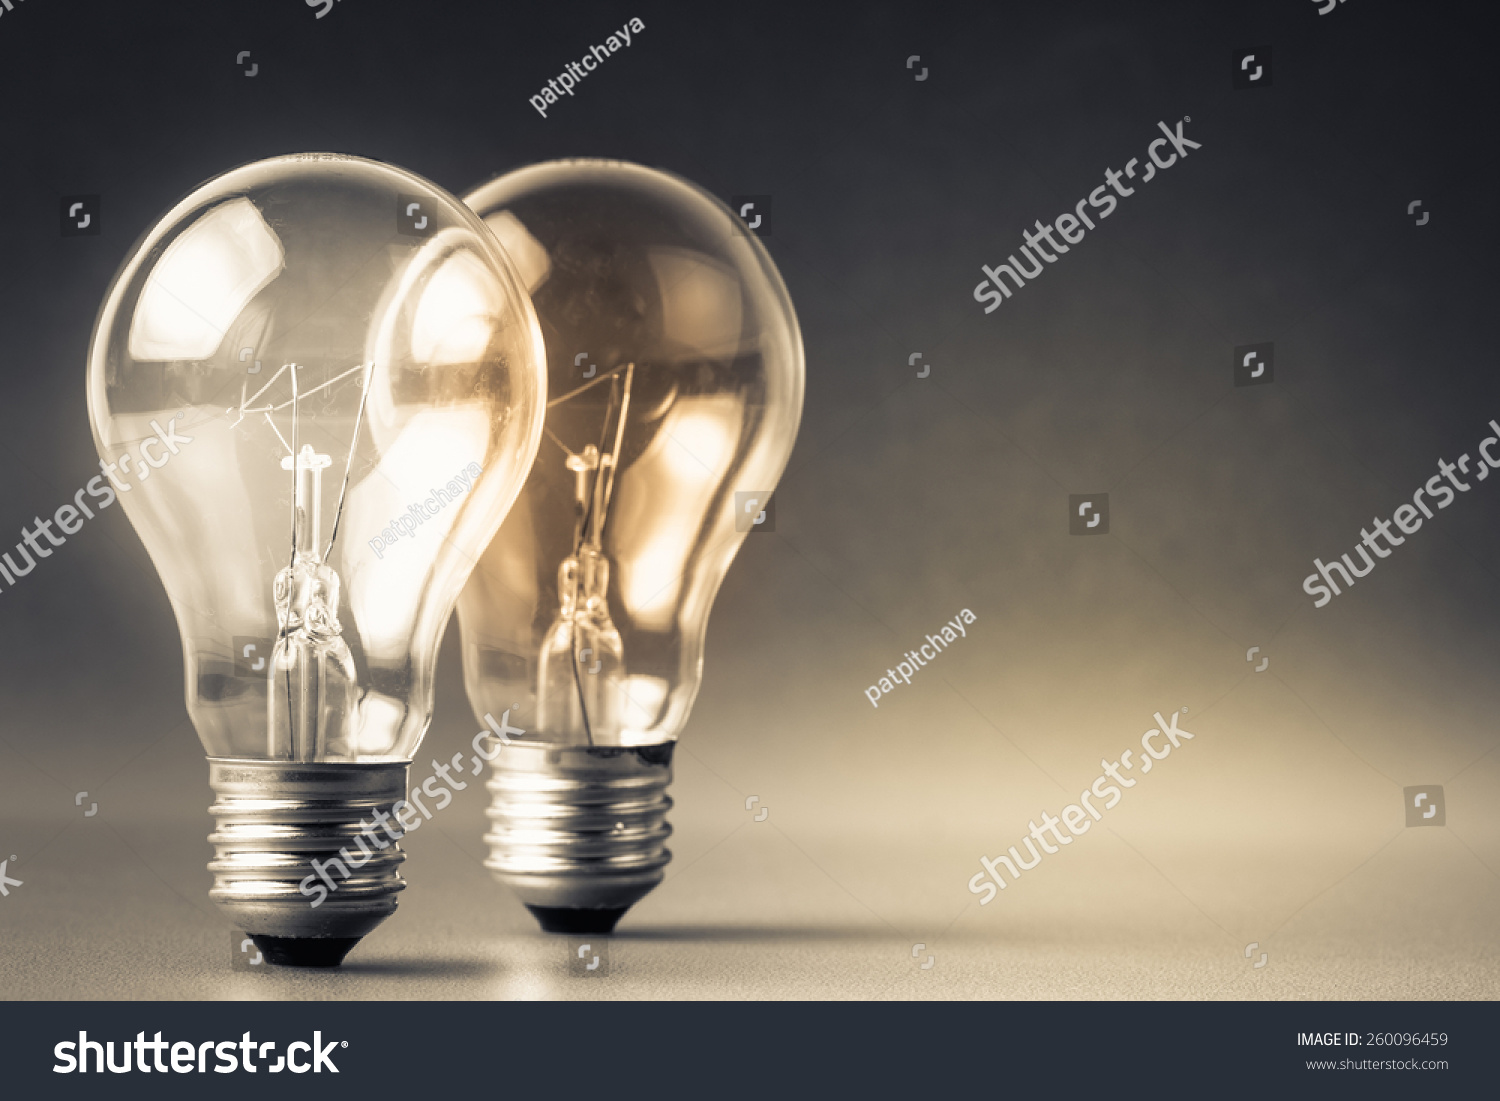 Two Glowing Light Bulbs Stock Photo 260096459 | Shutterstock